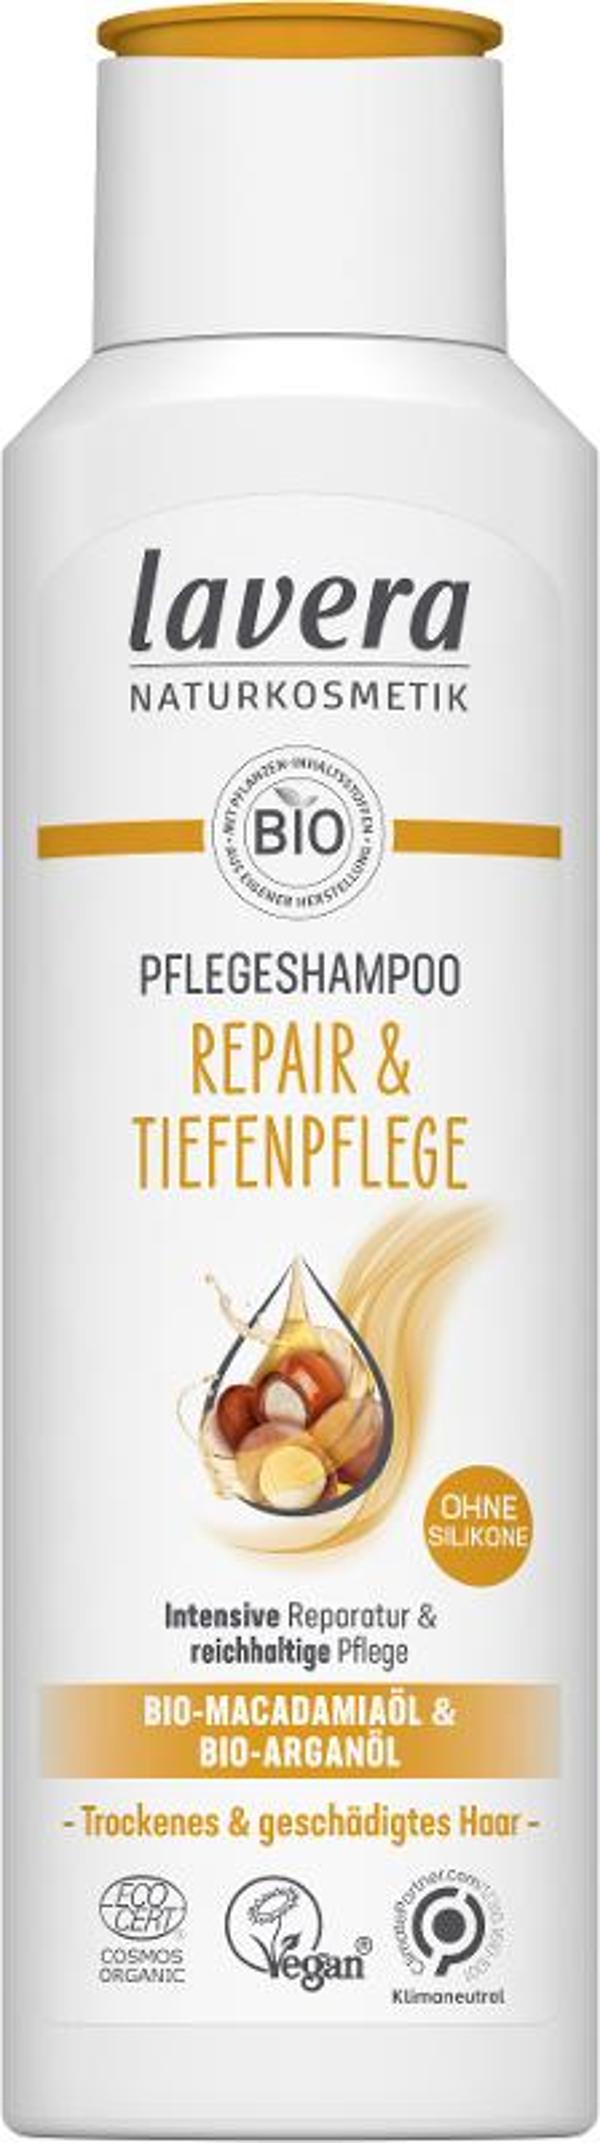 Produktfoto zu Repair & Pflege Shampoo, 250ml